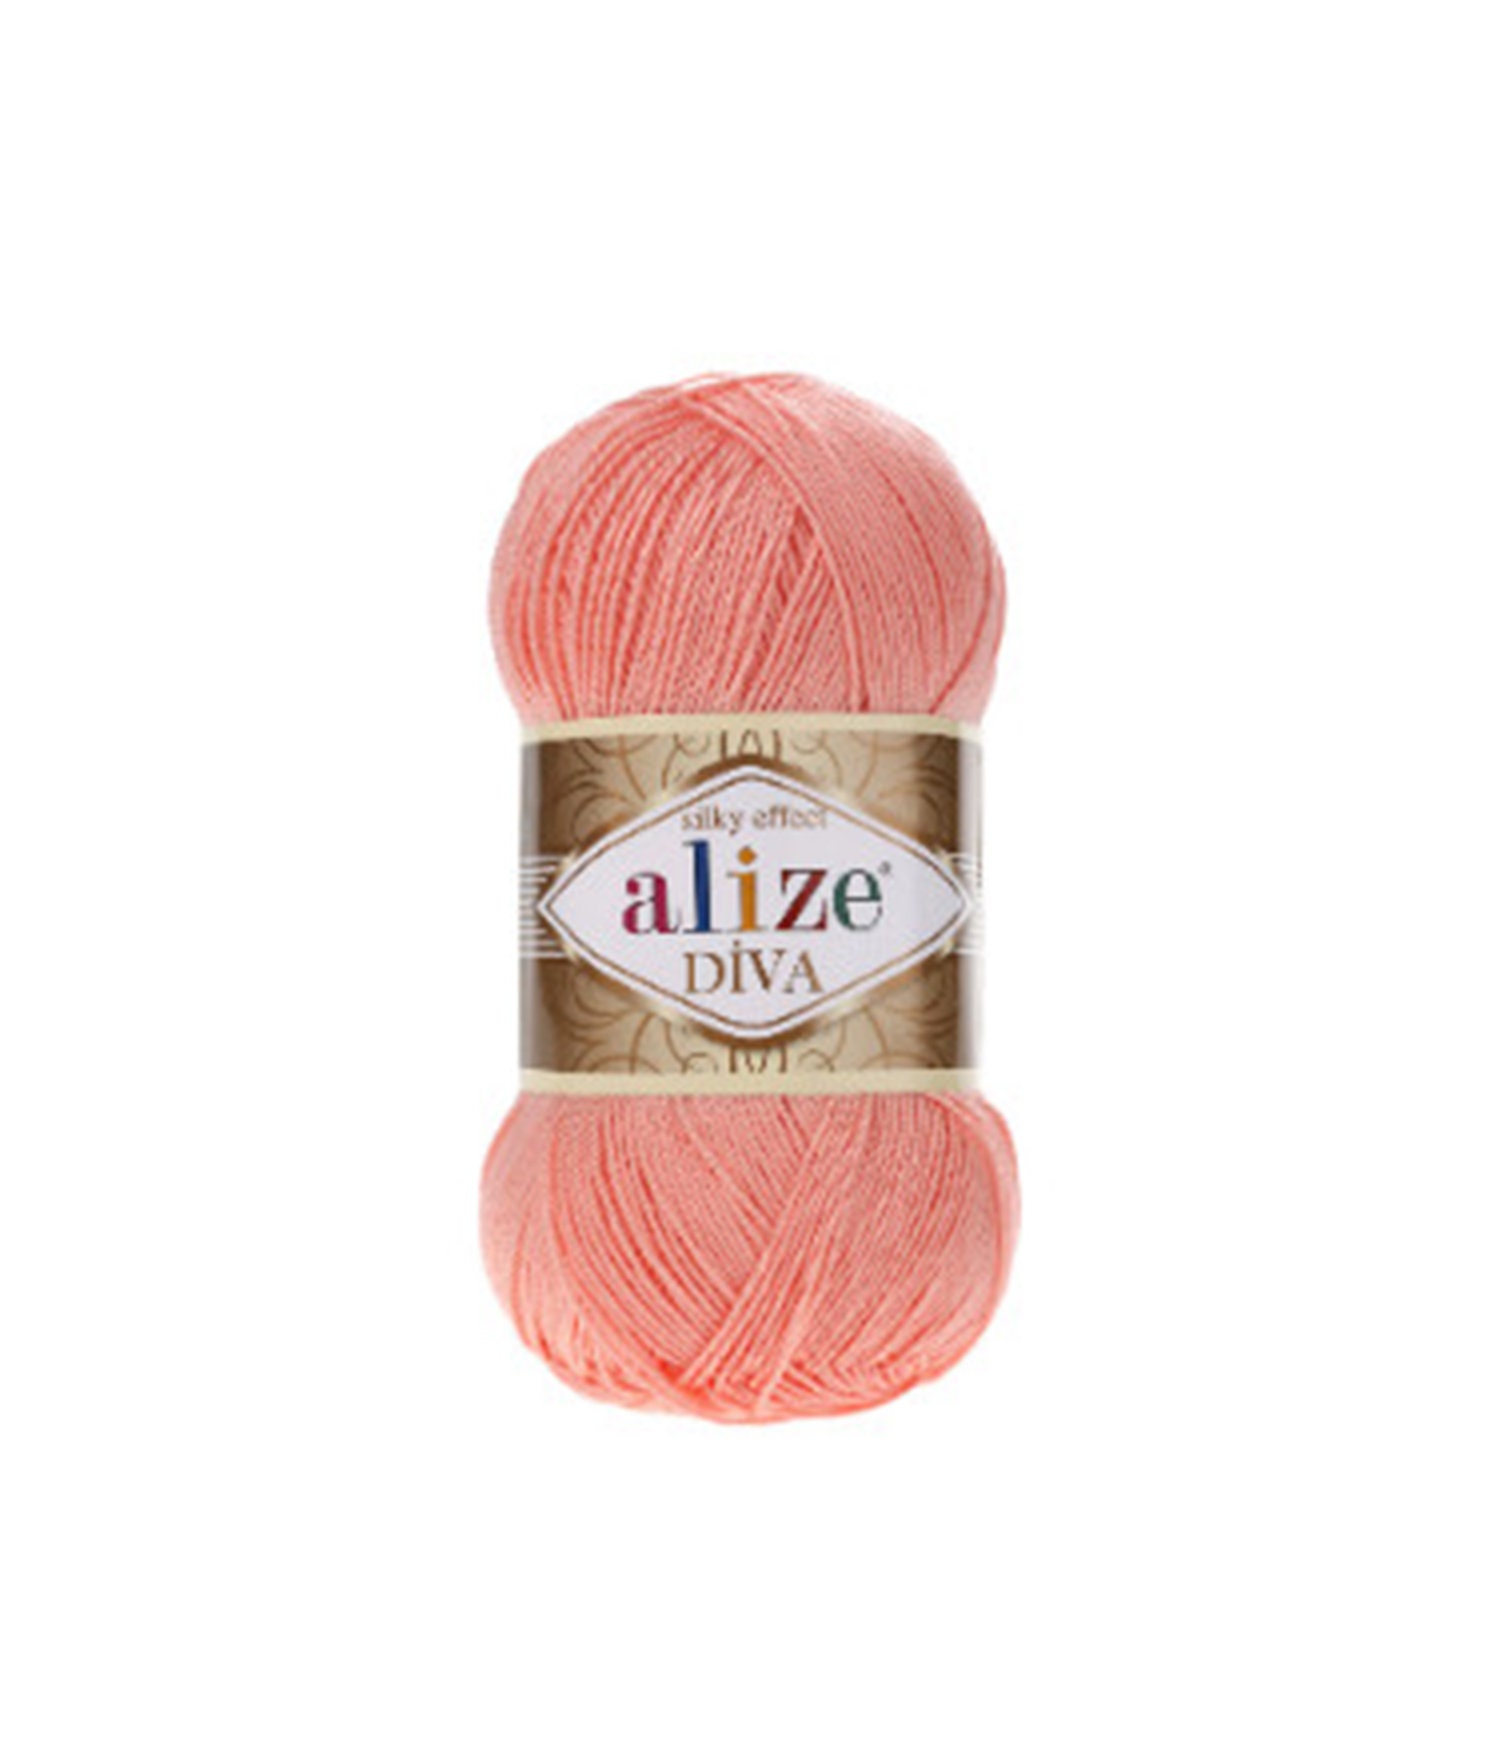 Alize Acrylic 382 Grams Crochet | Etsy